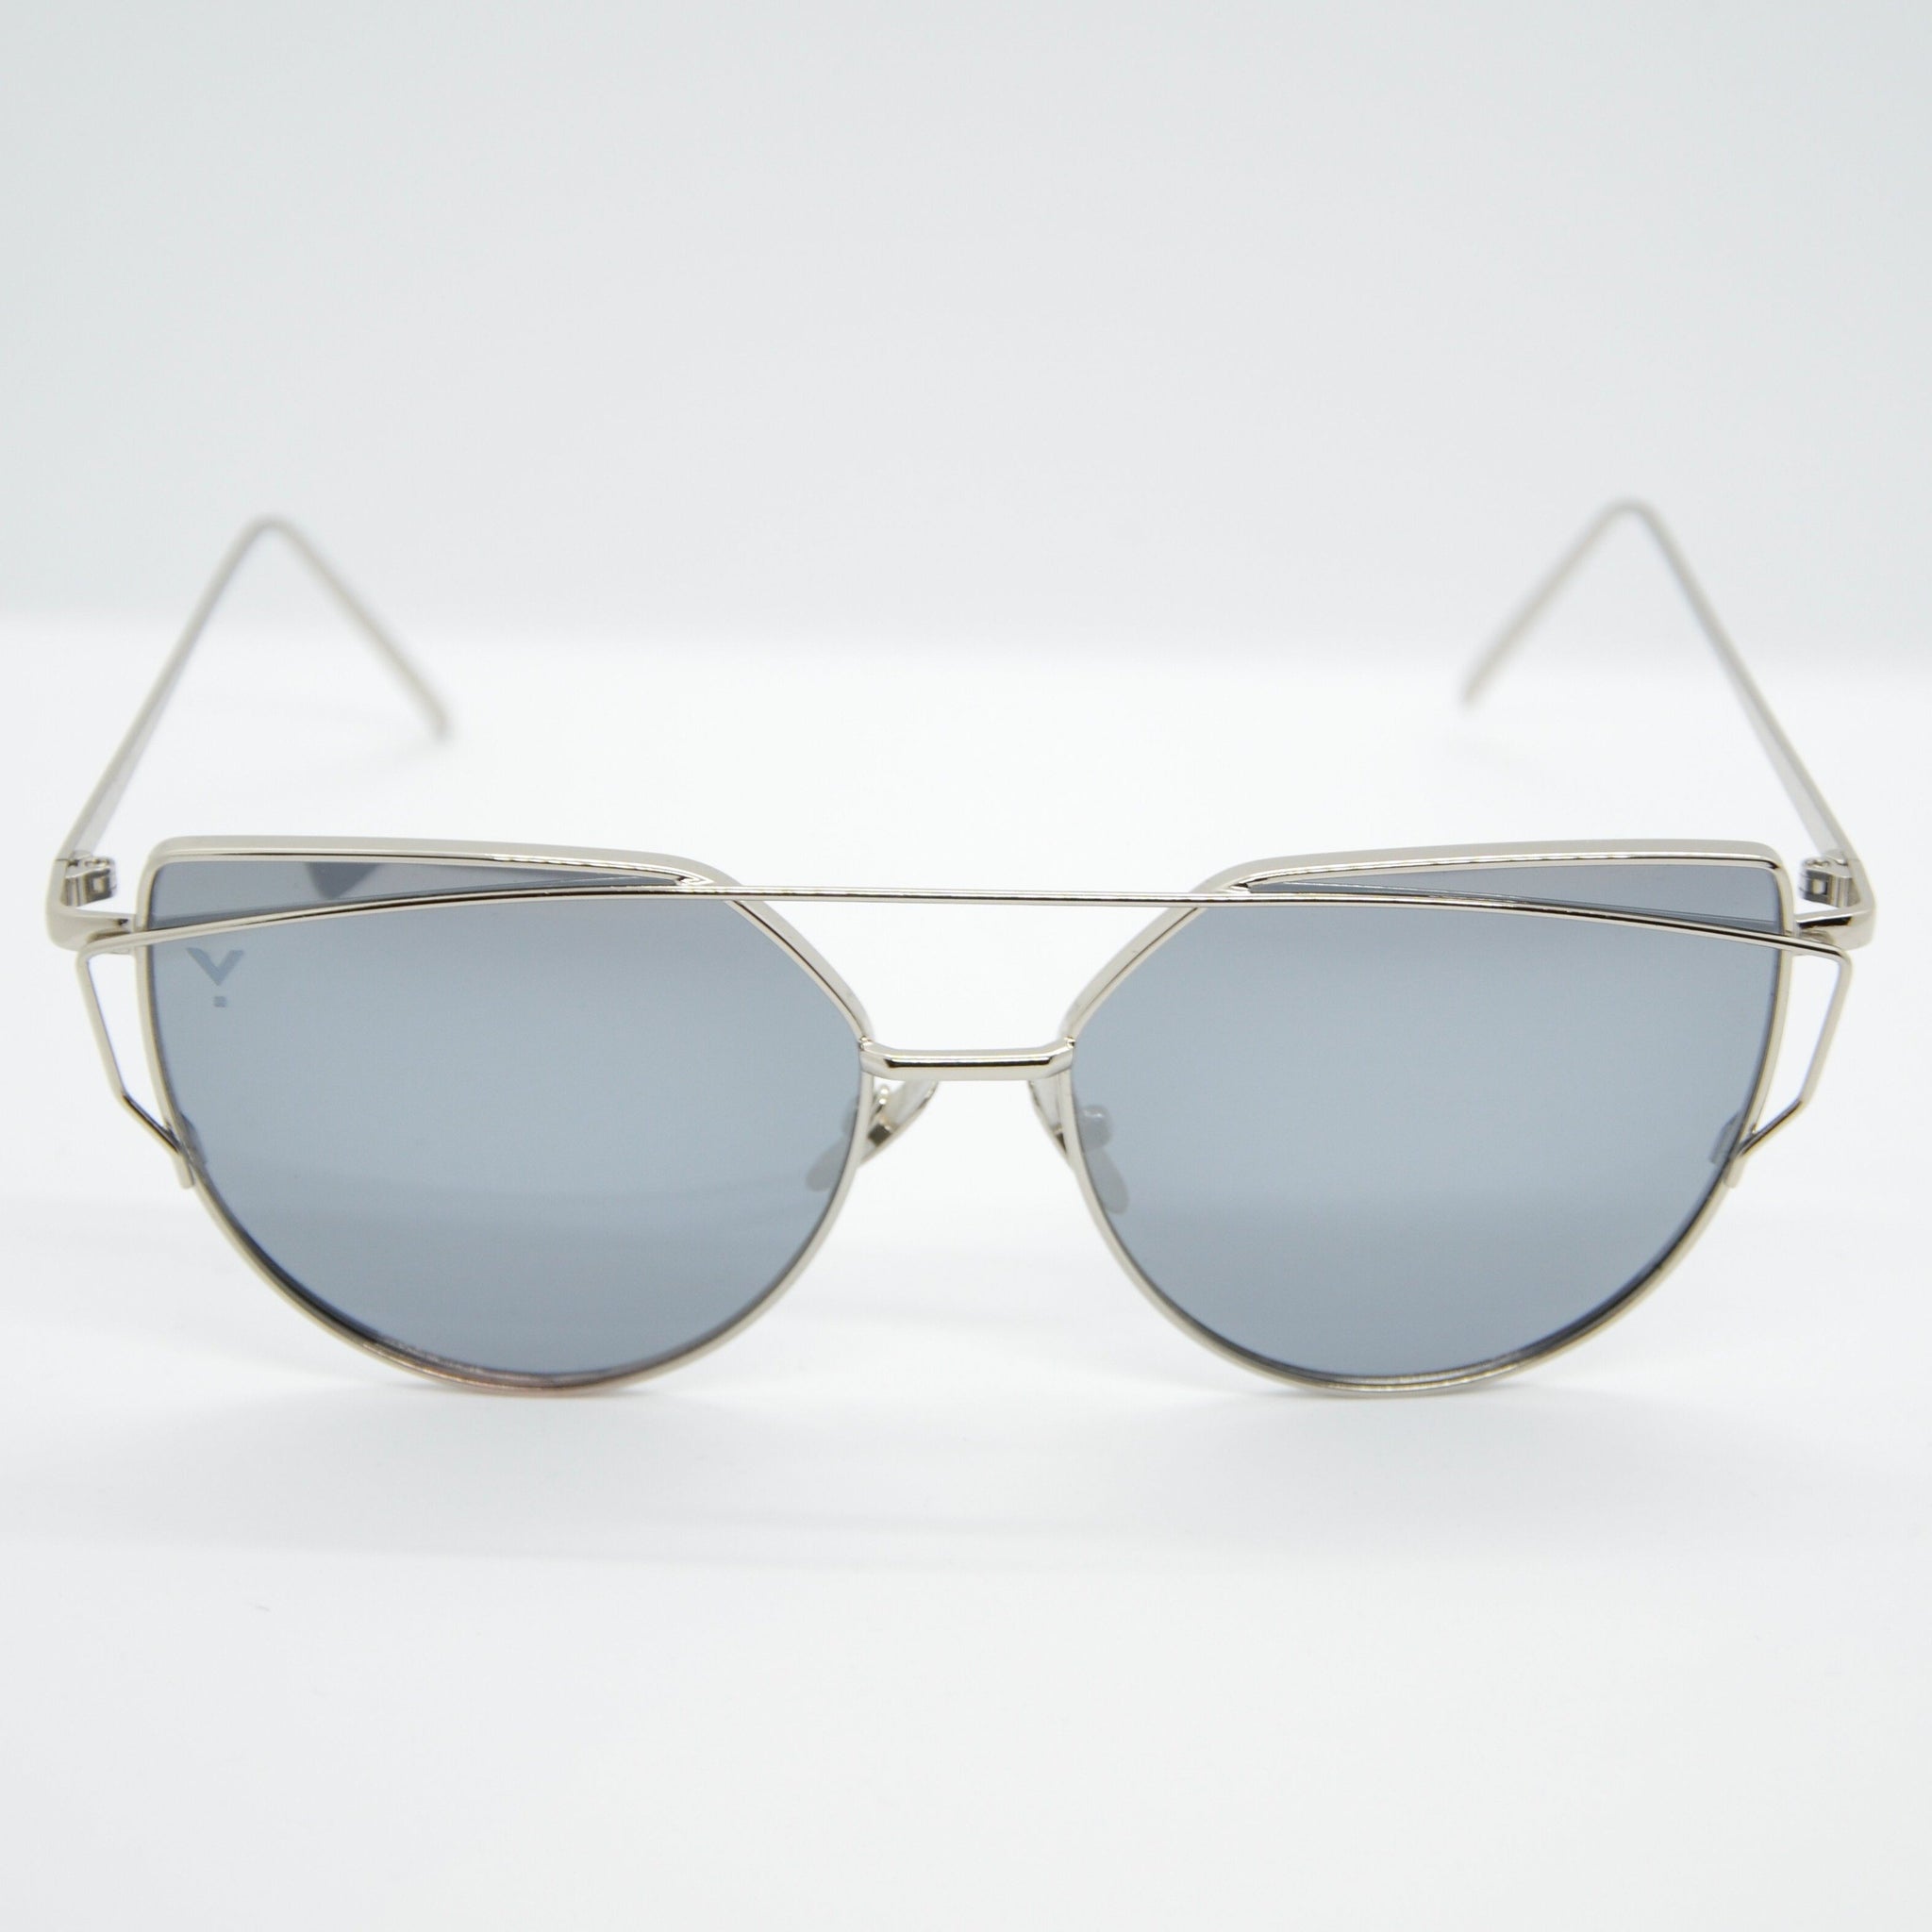 Infra - Sunglasses | AVAYOS